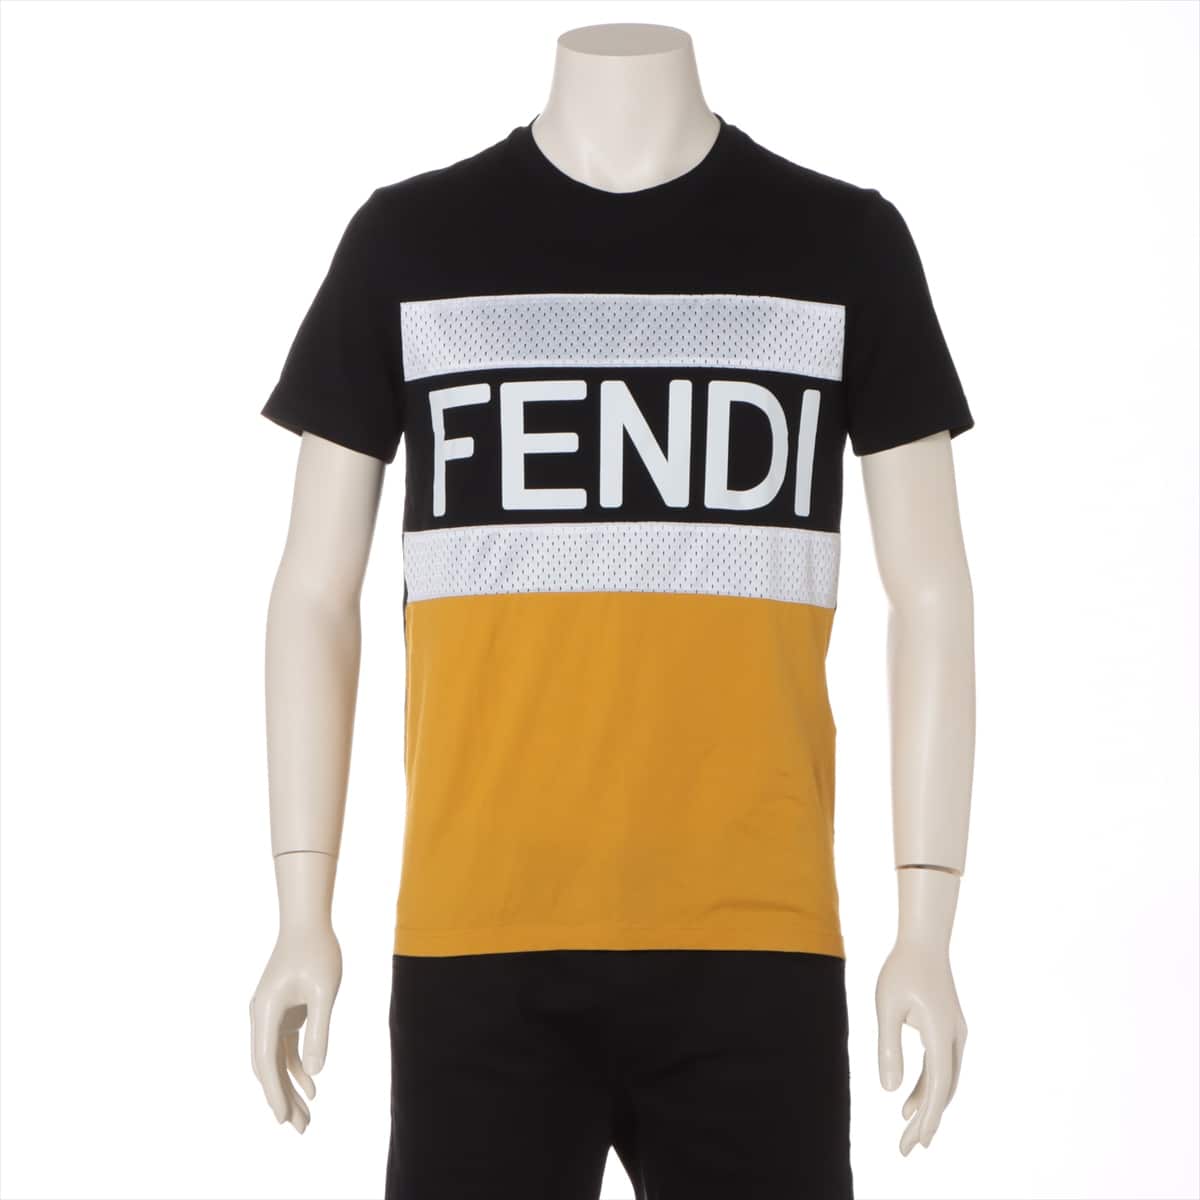 Fendi 21 years Cotton & Polyester T-shirt S Men's Black x yellow  FAF532